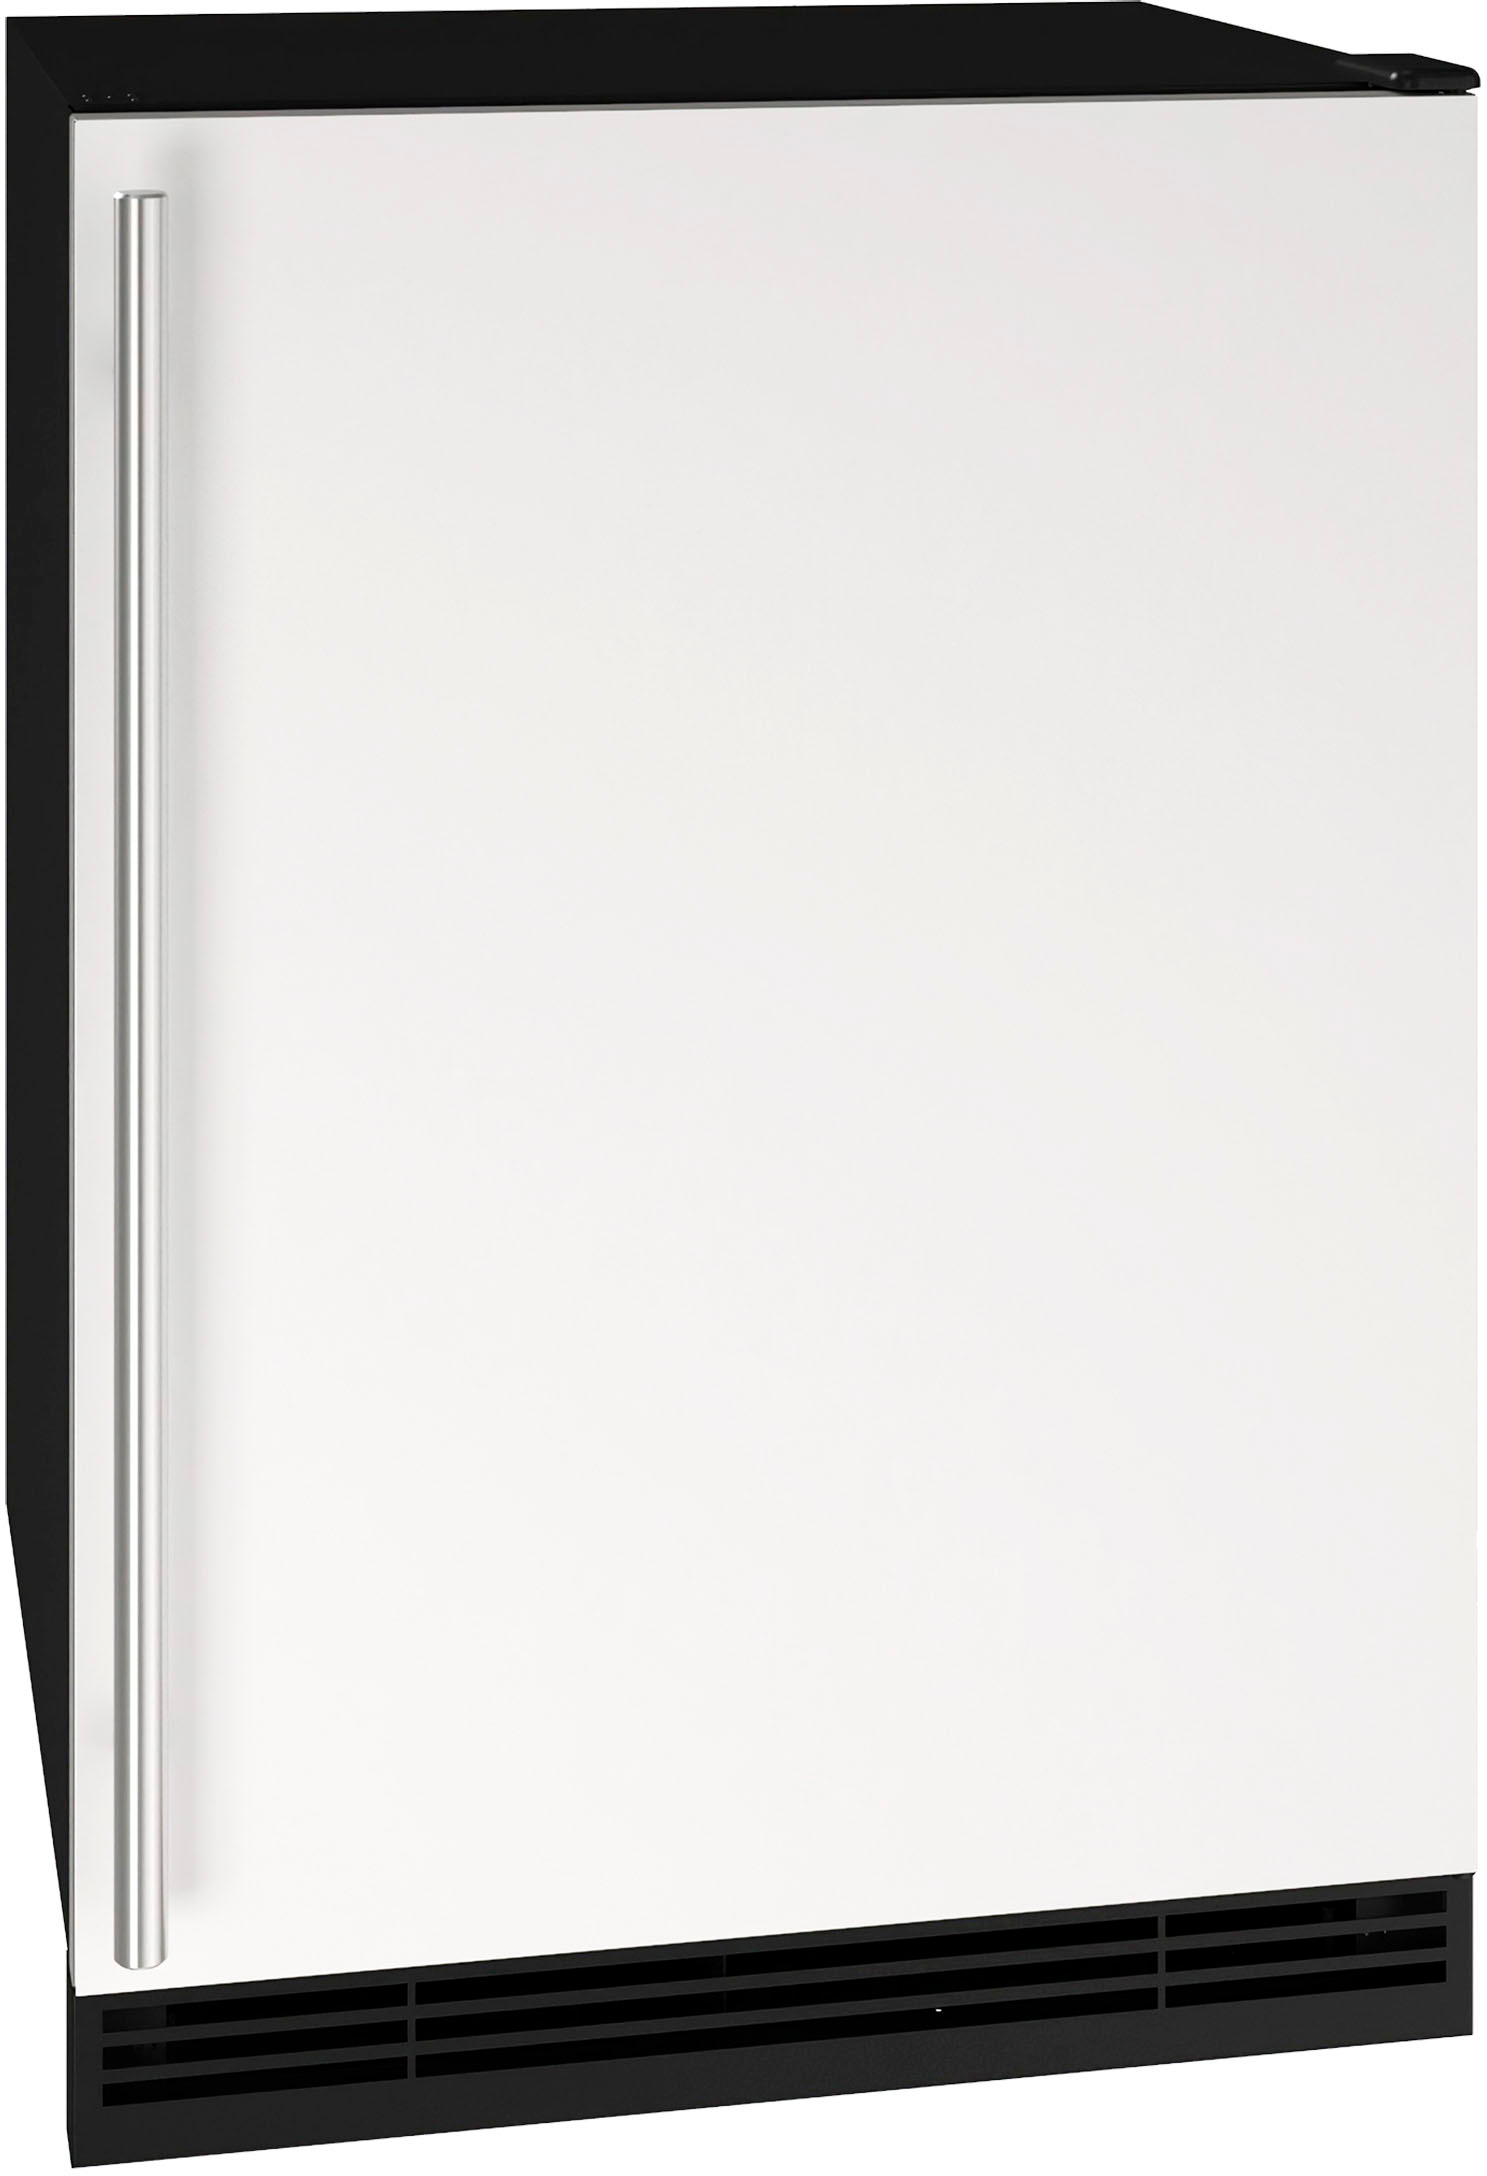 Angle View: U-Line - 1 Class 5.7 Cu. Ft. Compact Refrigerator - White